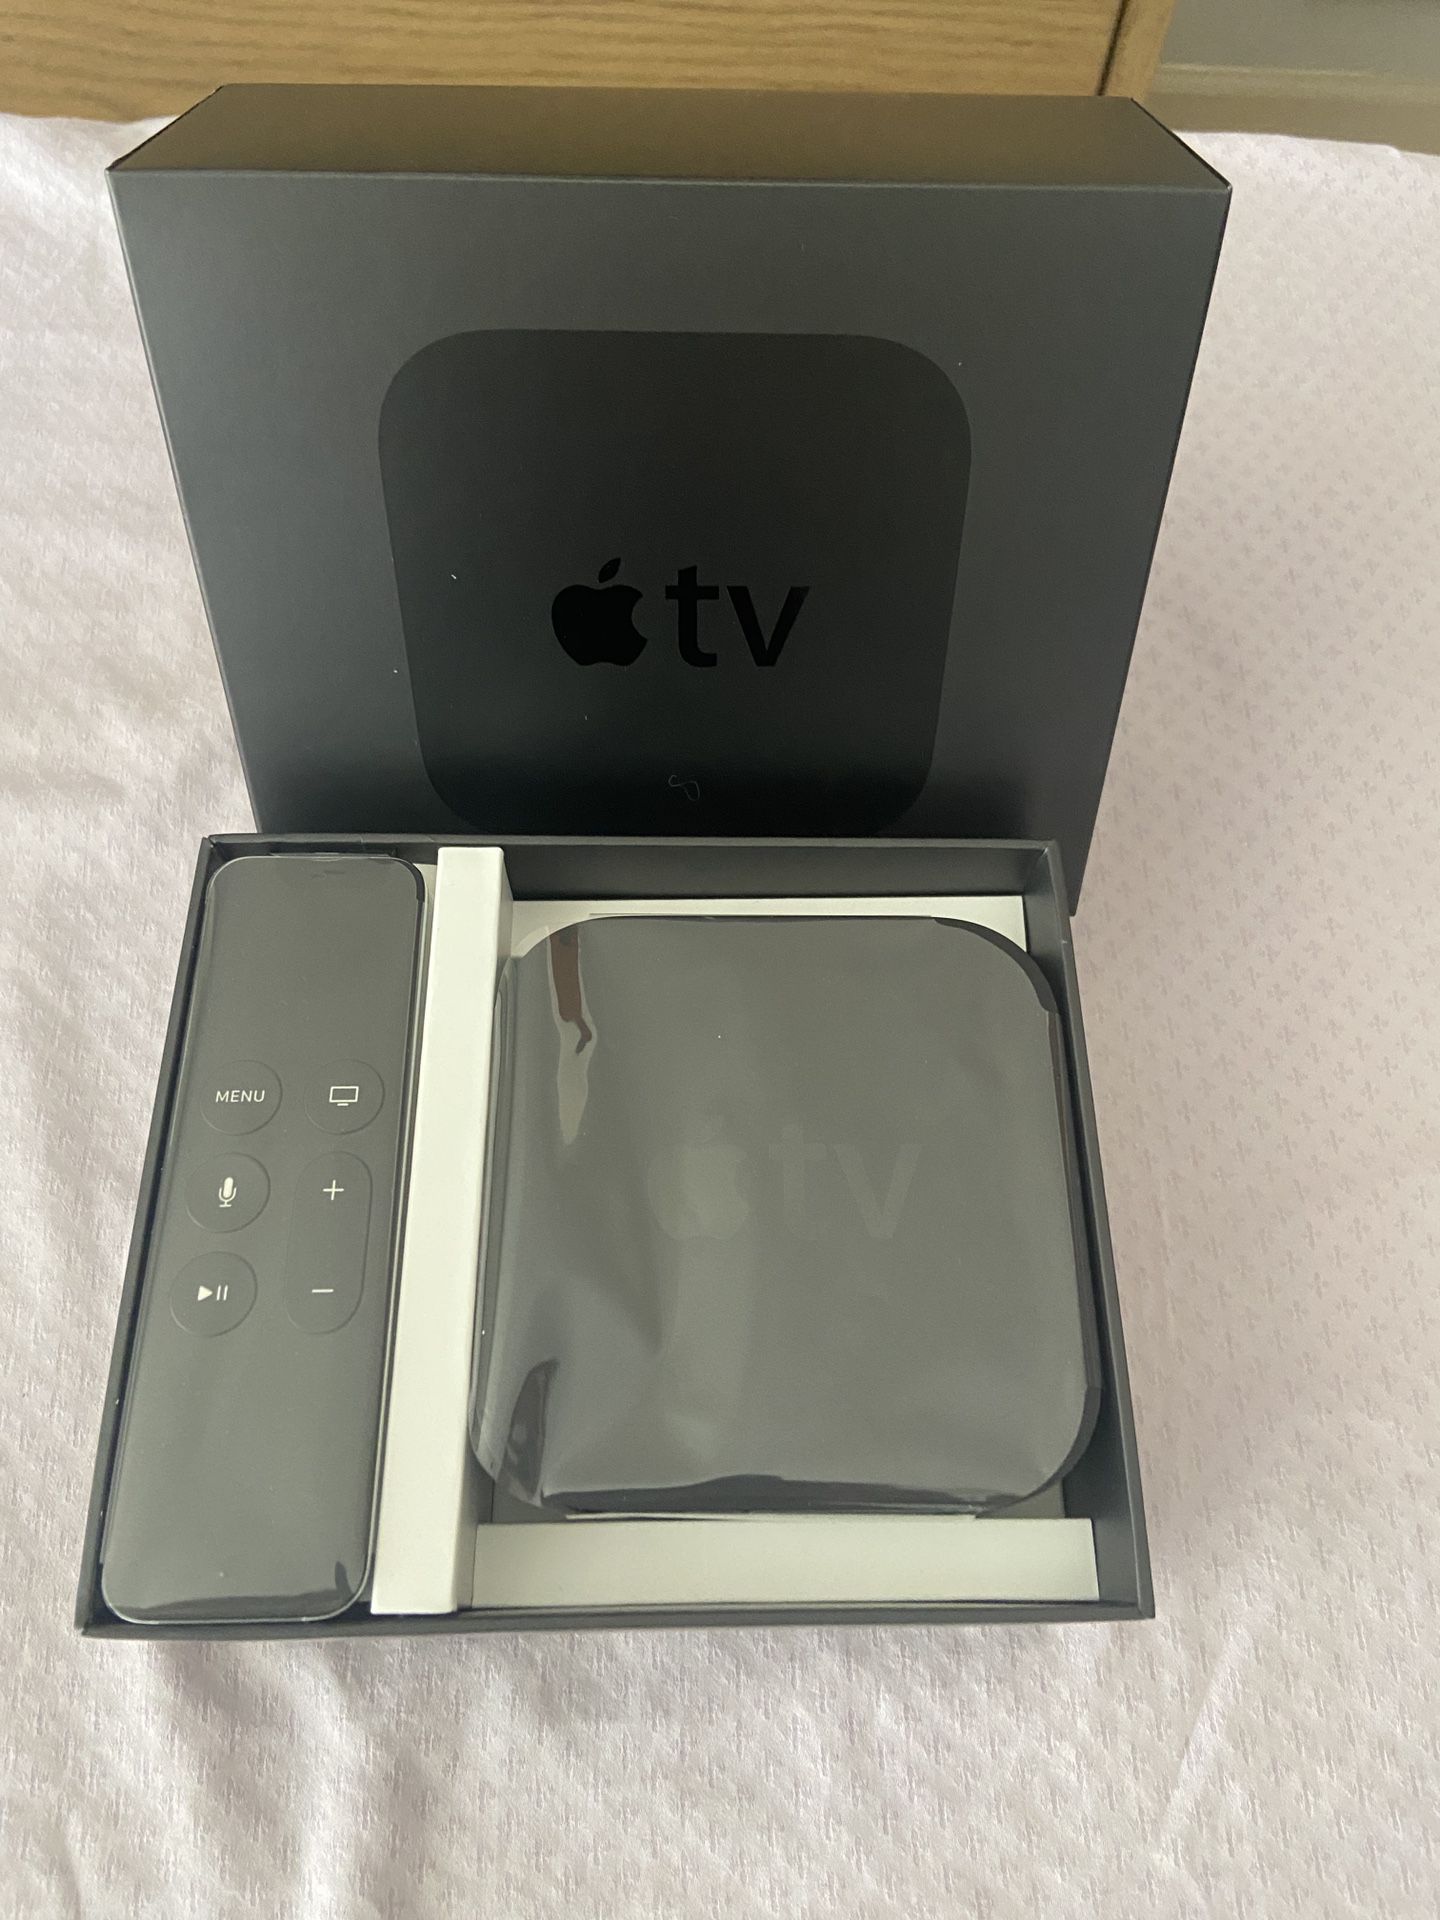 Apple Tv HD (4th generation, 64gb)